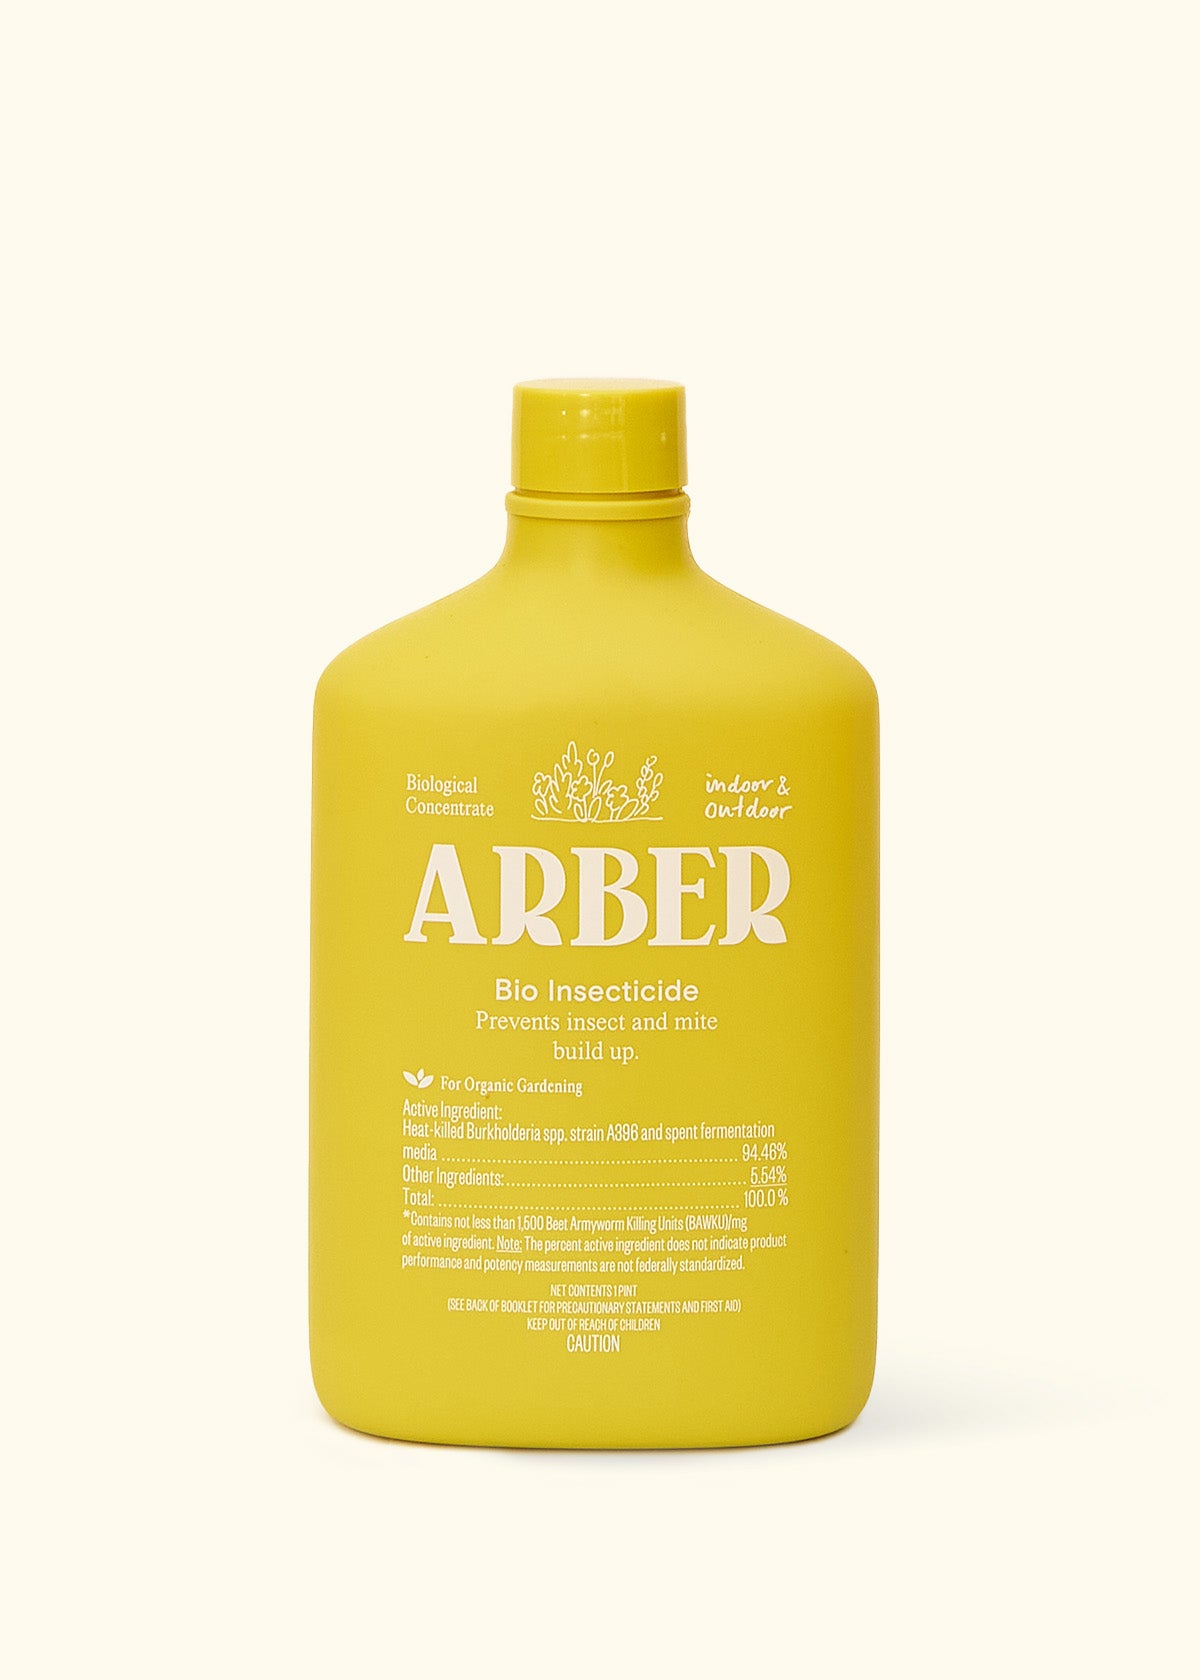 Arber Bio Insecticide.